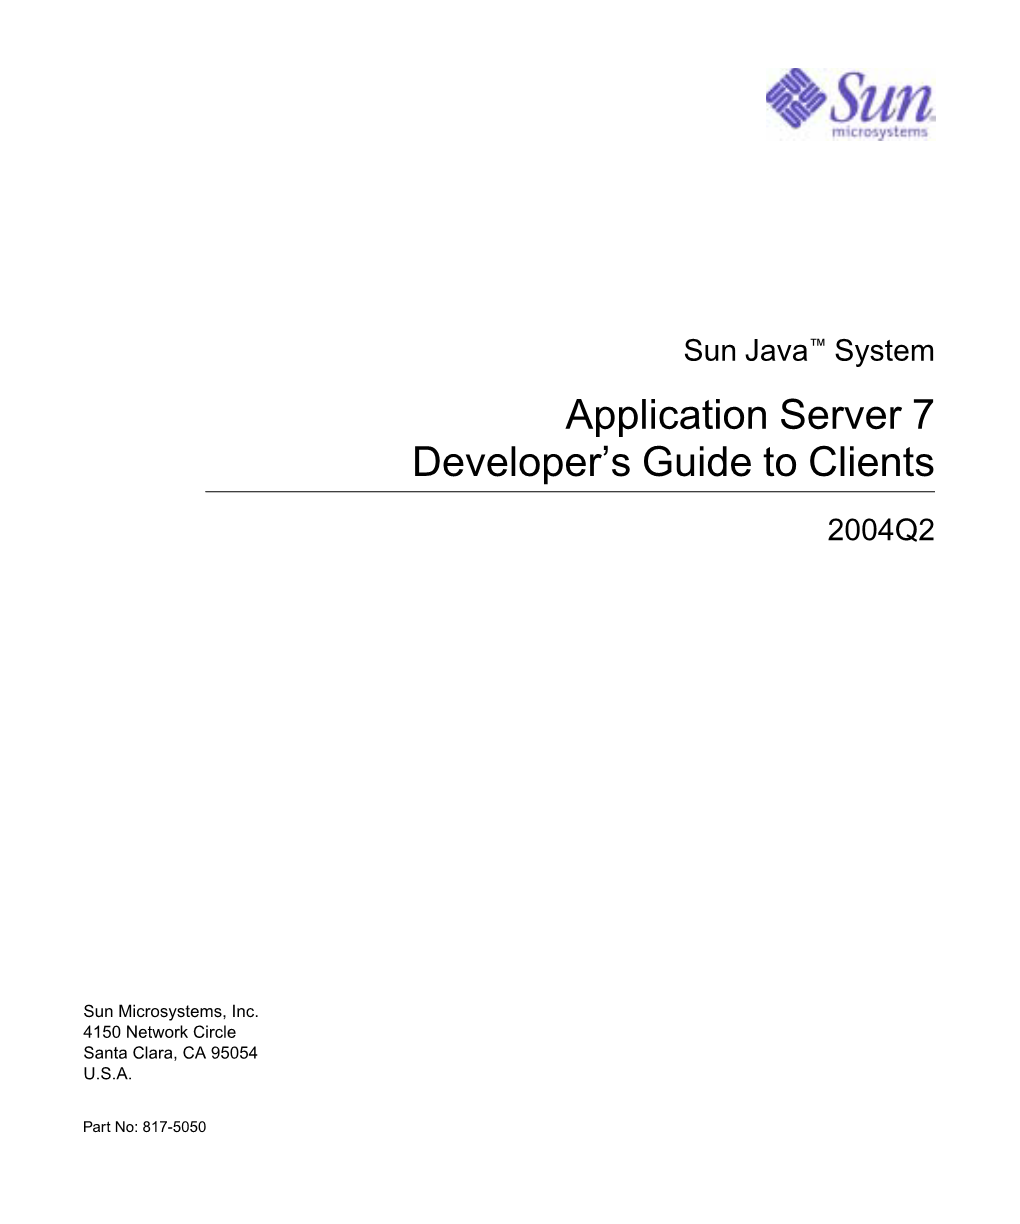 Sun Java System Application Server 7 2004Q2 Developer's Guide to Clients